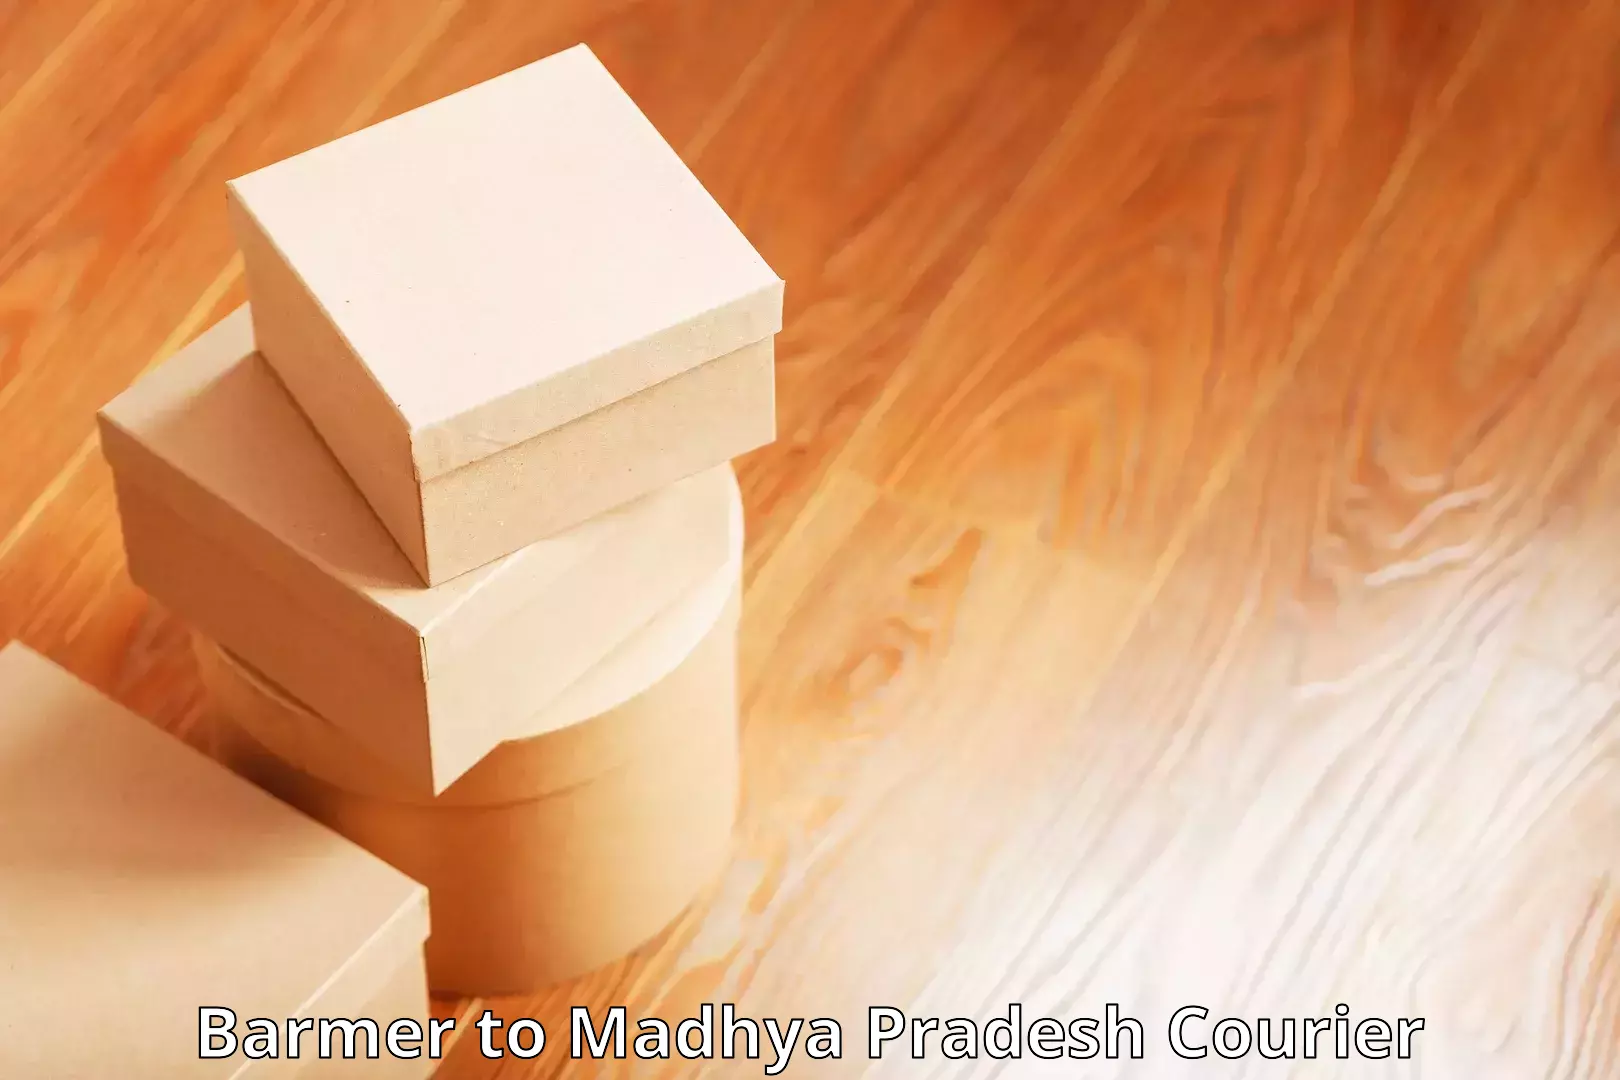 Cash on delivery service Barmer to Madhya Pradesh